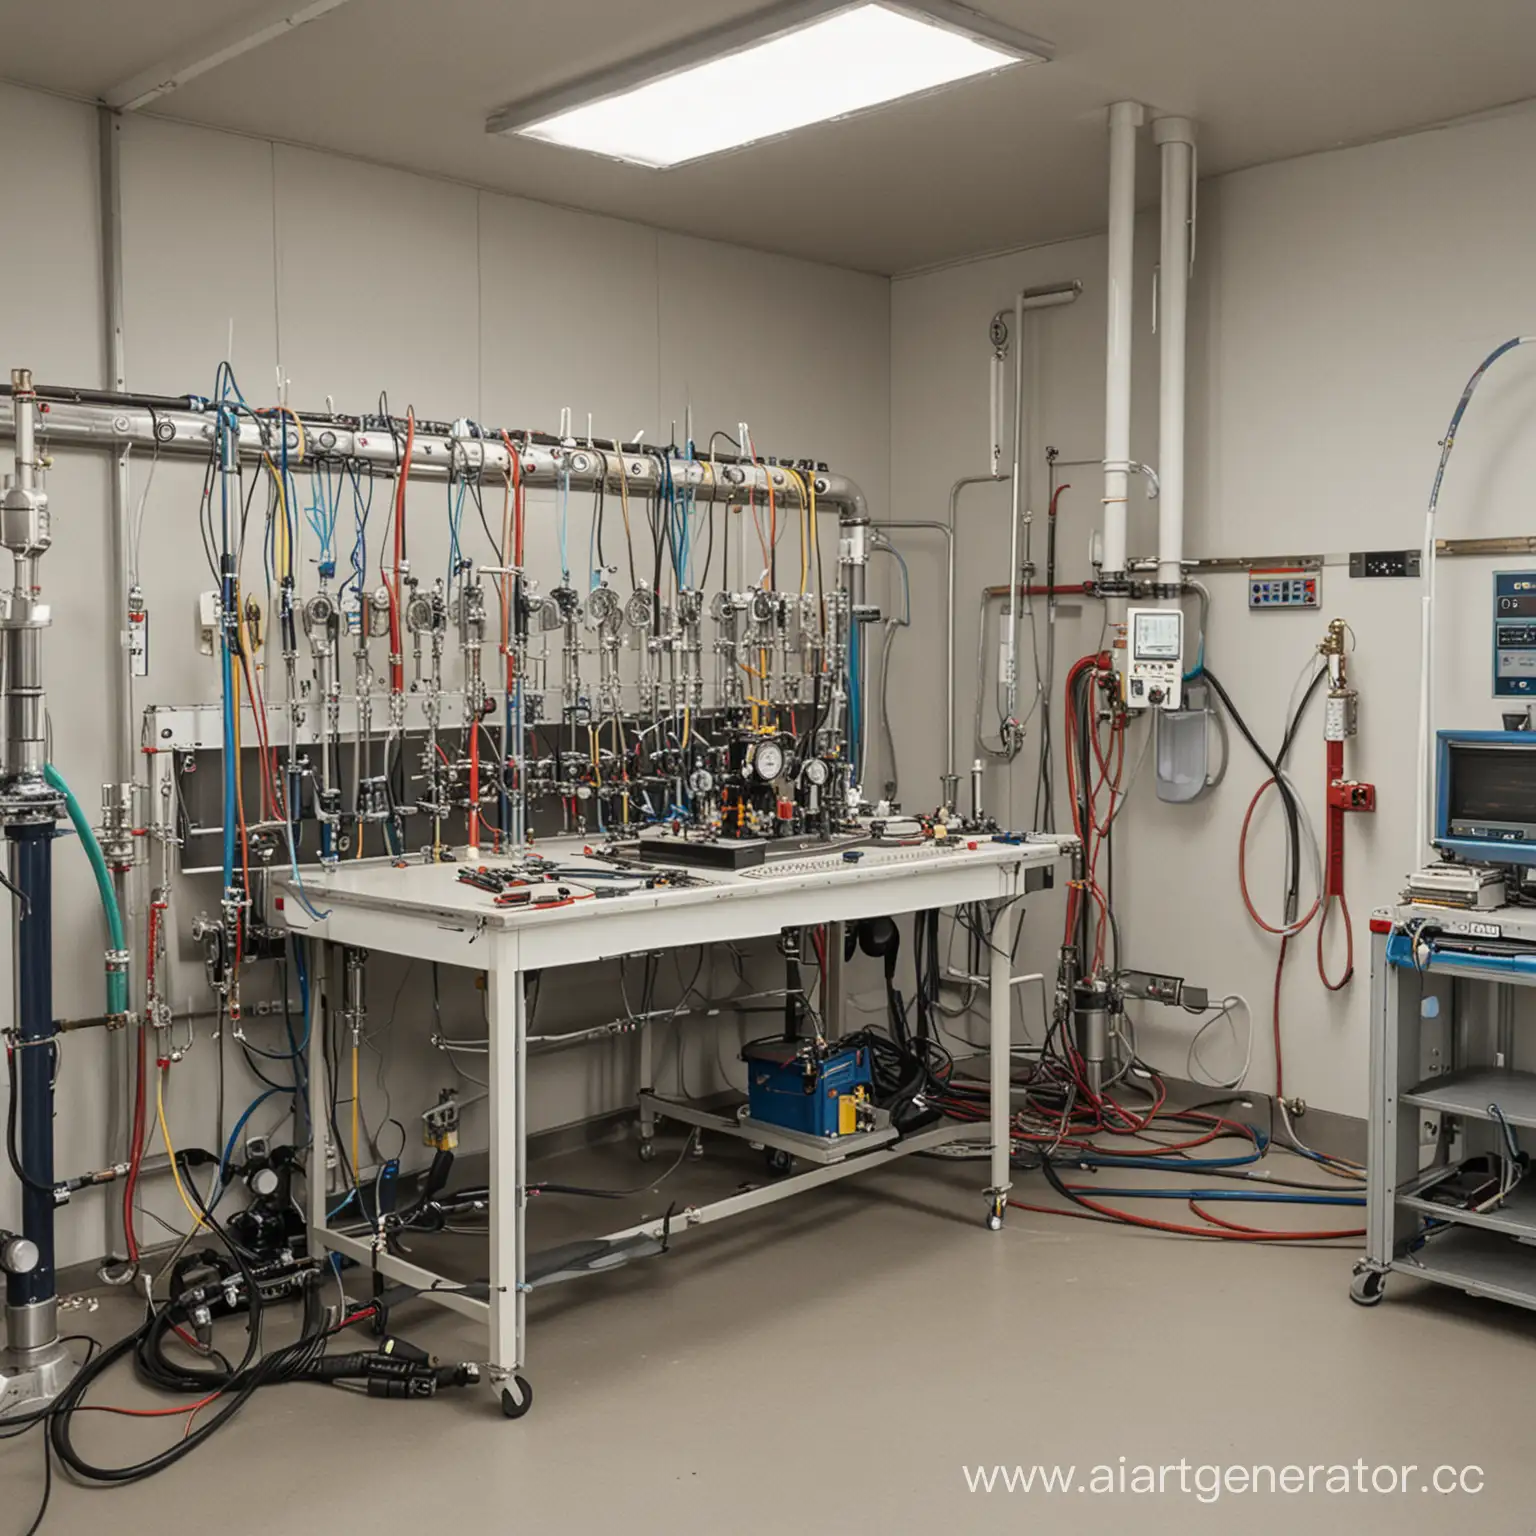 HighPressure-Hose-Testing-in-a-Technical-Laboratory